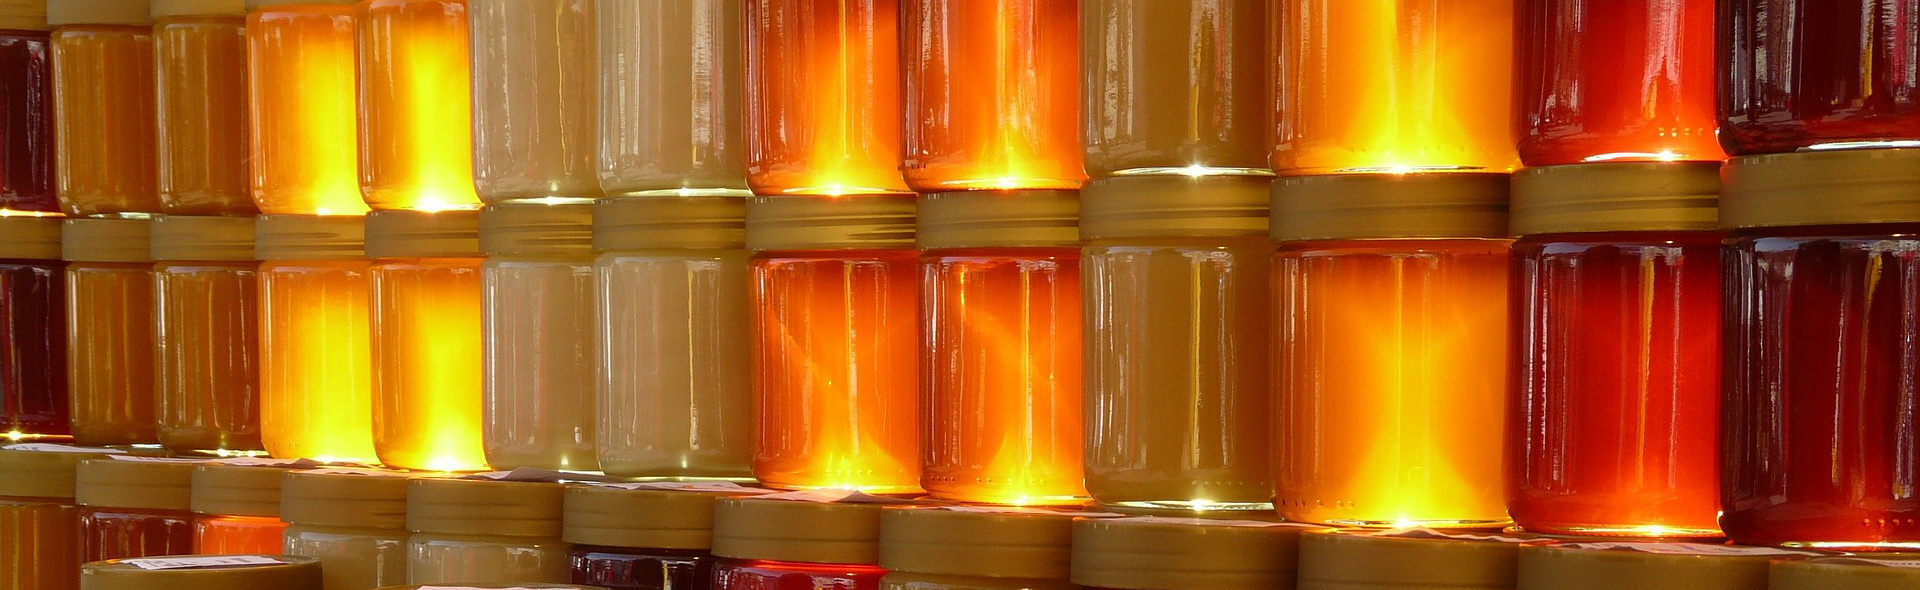 Tarros de miel